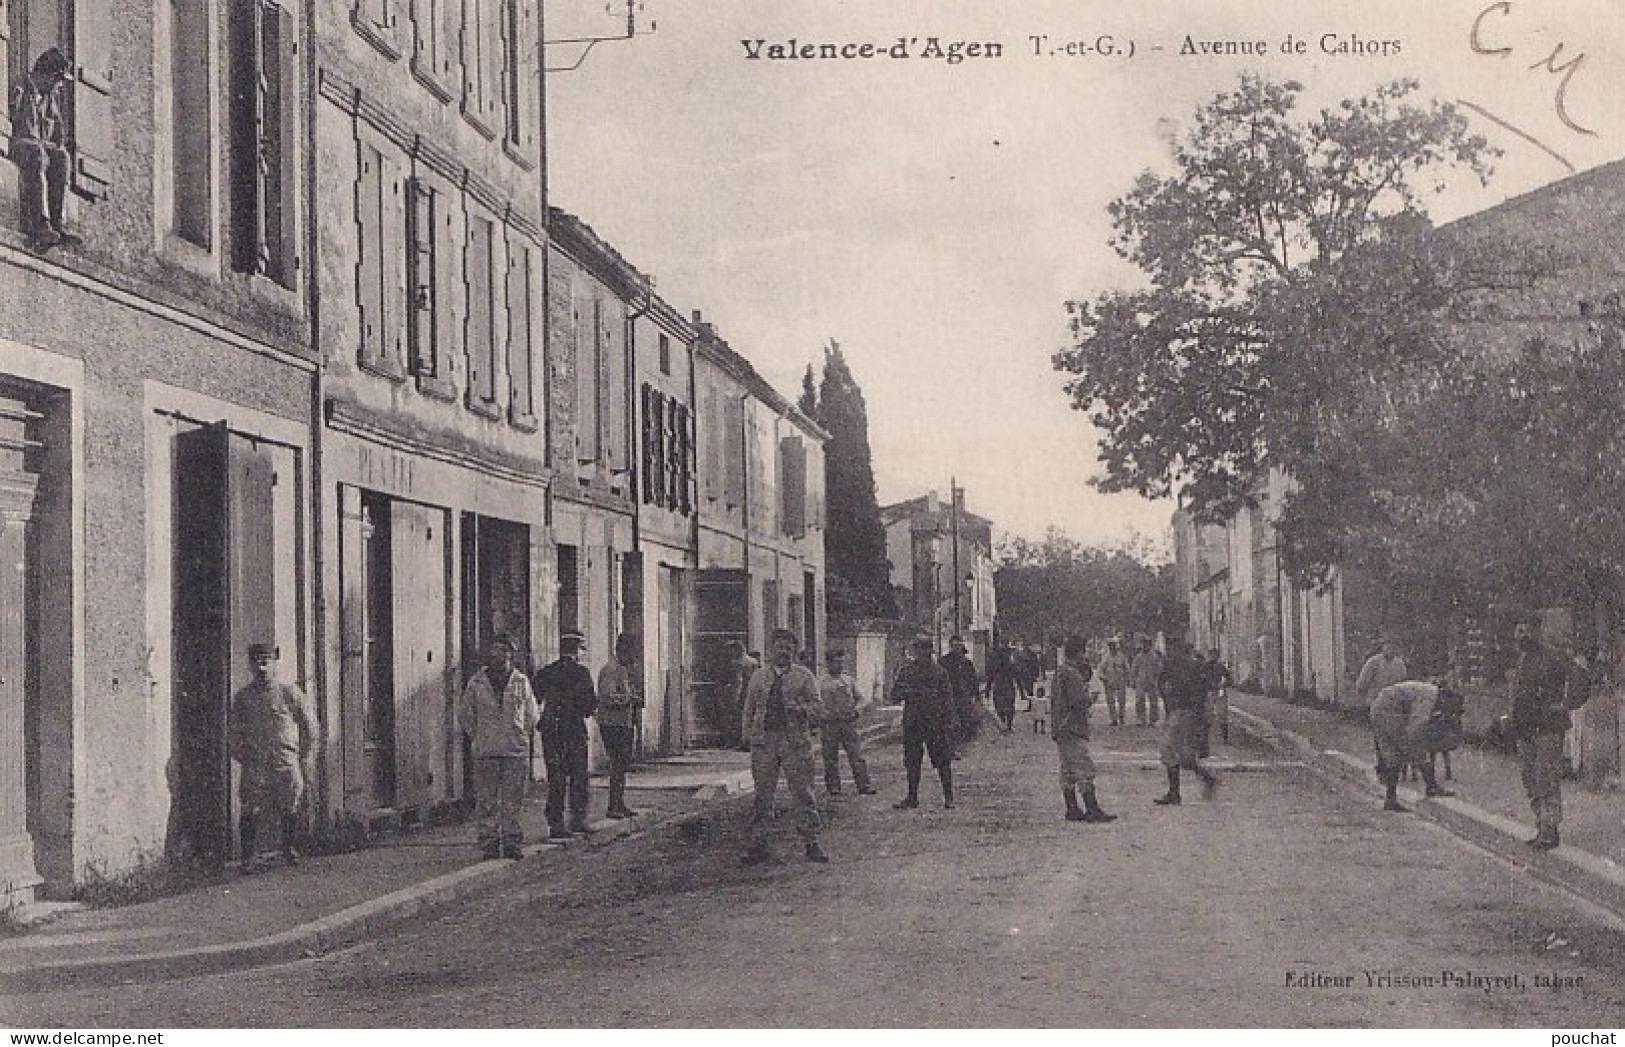  F23-82) VALENCE D 'AGEN (TARN ET GARONNE) AVENUE DE CAHORS - ANIMEE - HABITANTS - MILITAIRES - EN 1916 - ( 2 SCANS )    - Valence